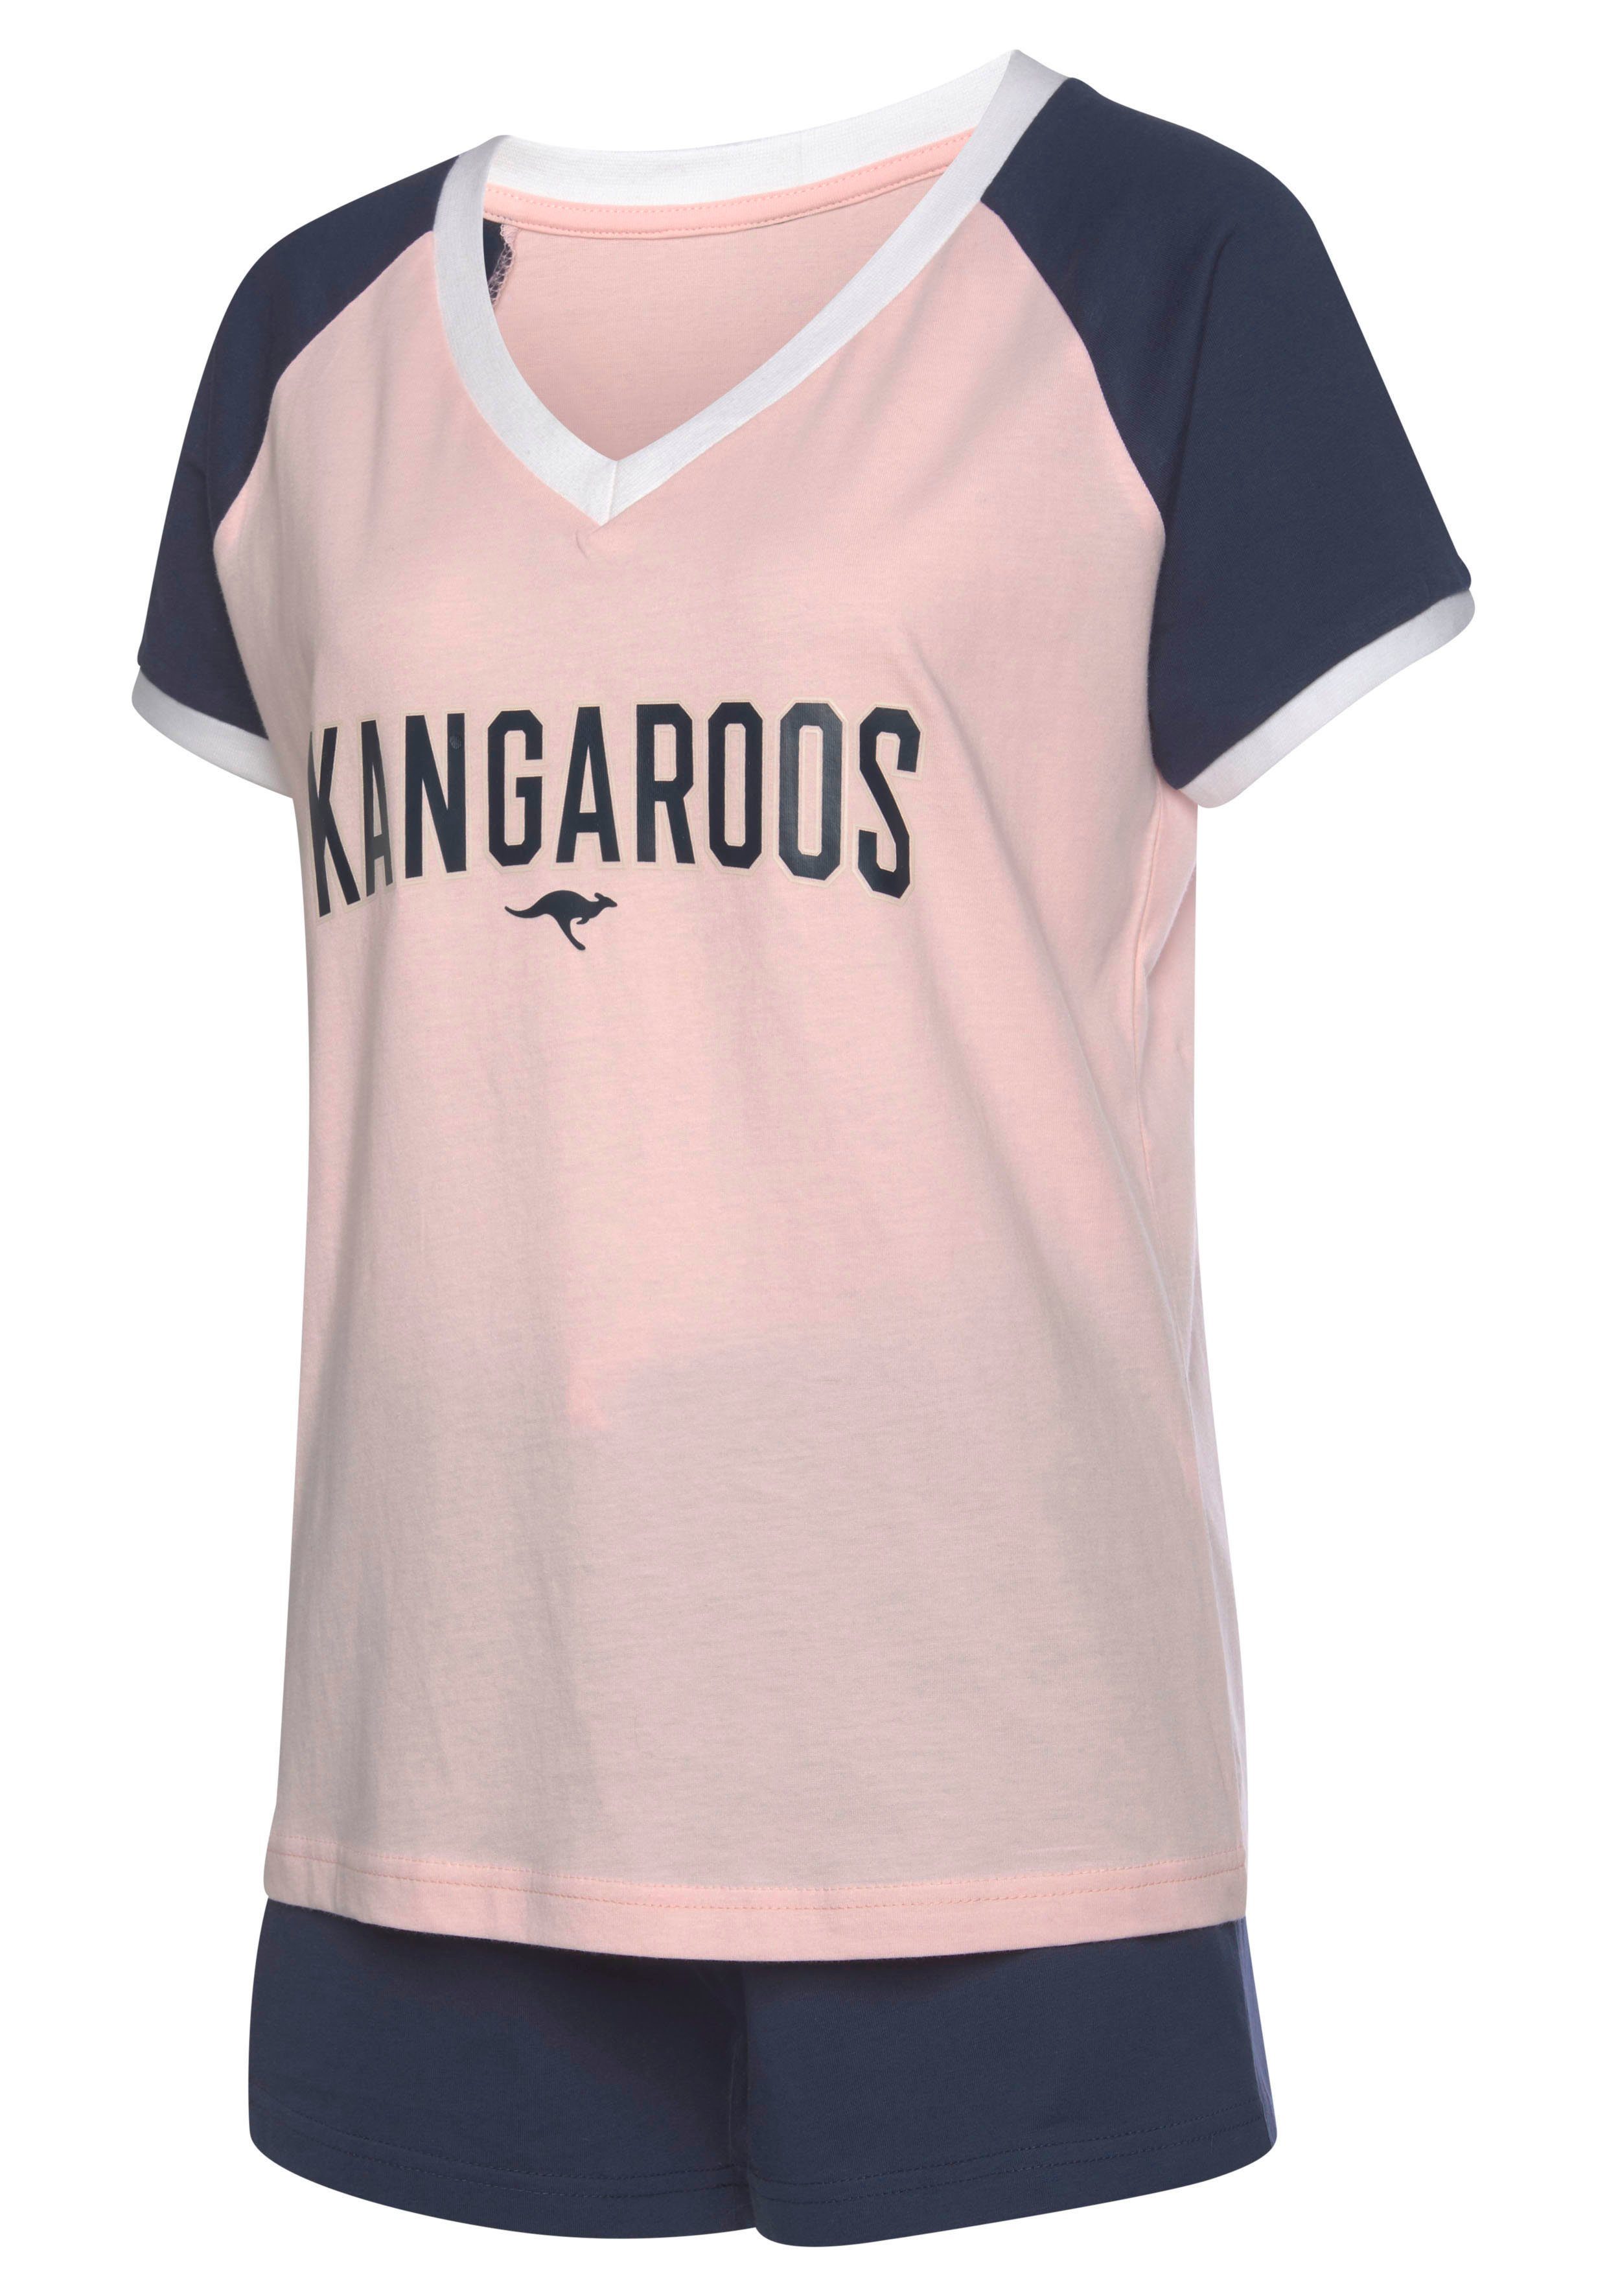 Raglanärmeln KangaROOS 1 tlg., rosa-dunkelblau kontrastfarbenen (2 Shorty mit Stück)